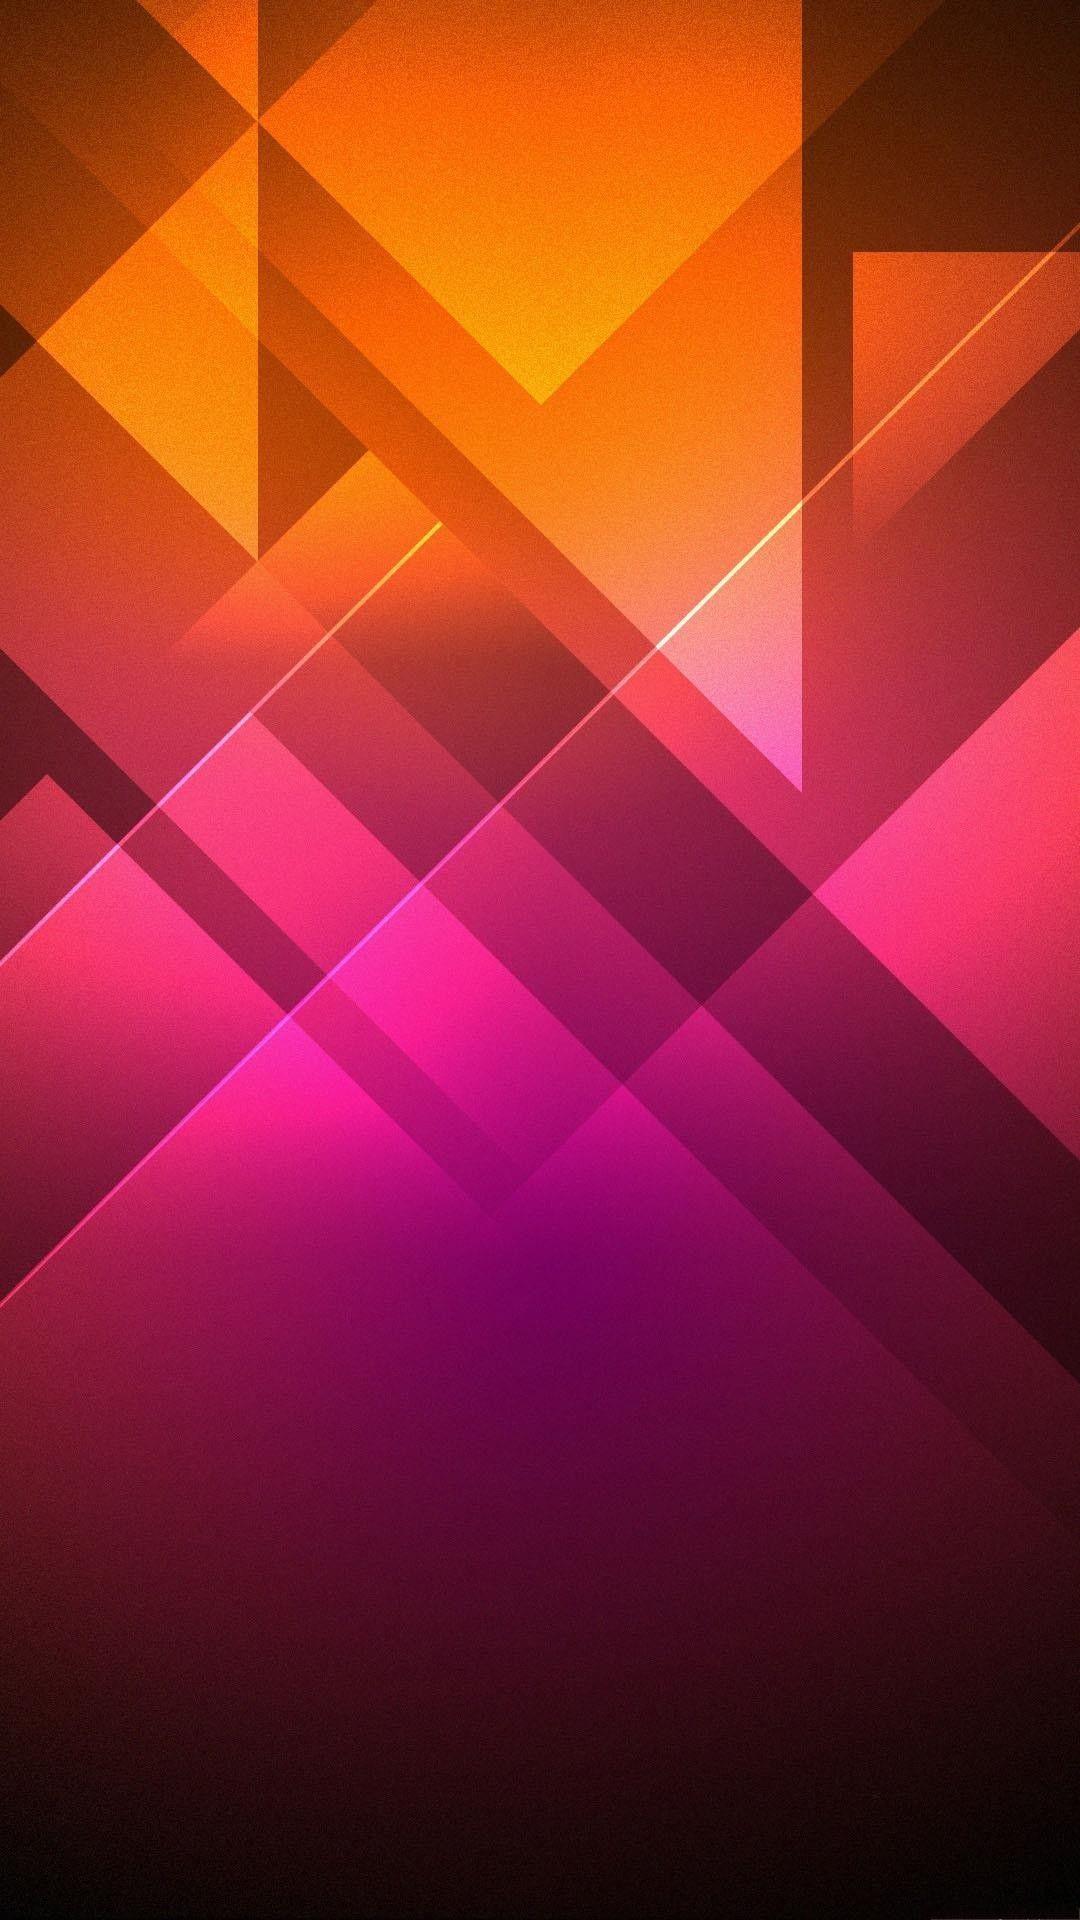 Android phone wallpaperDownload free wallpaper for desktop